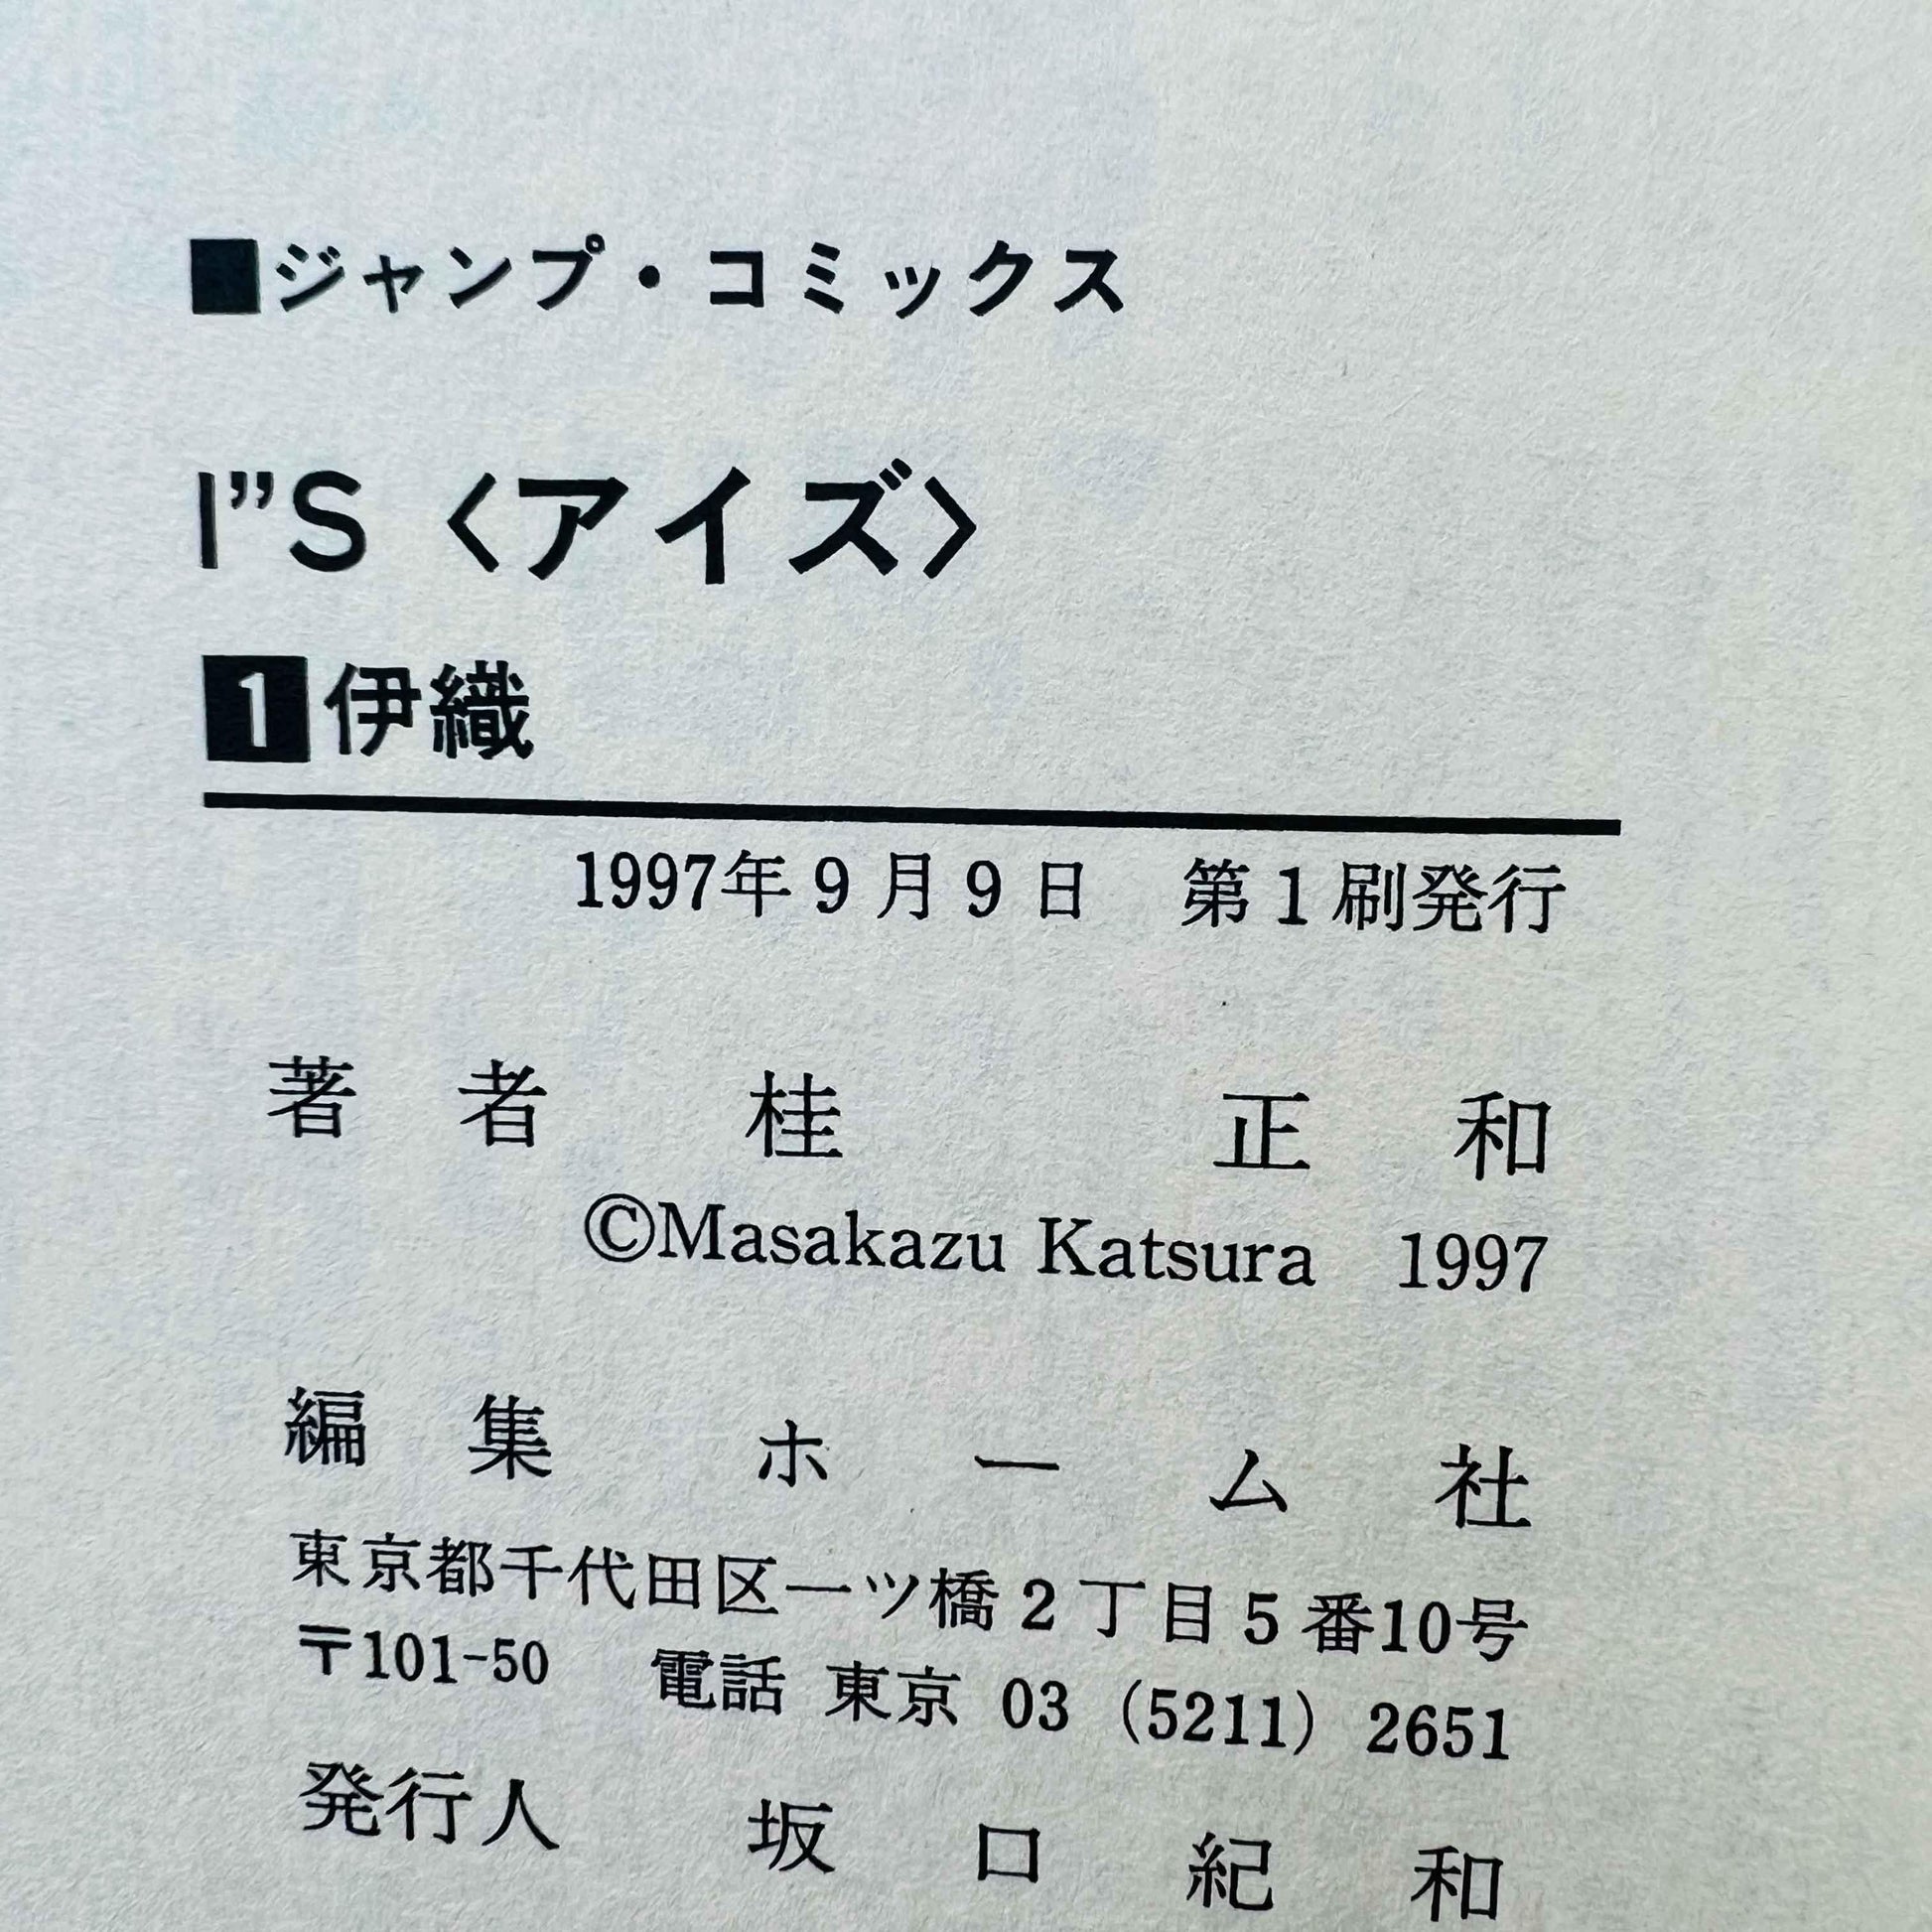 I"s - Volume 01 - 1stPrint.net - 1st First Print Edition Manga Store - M-IS-01-001